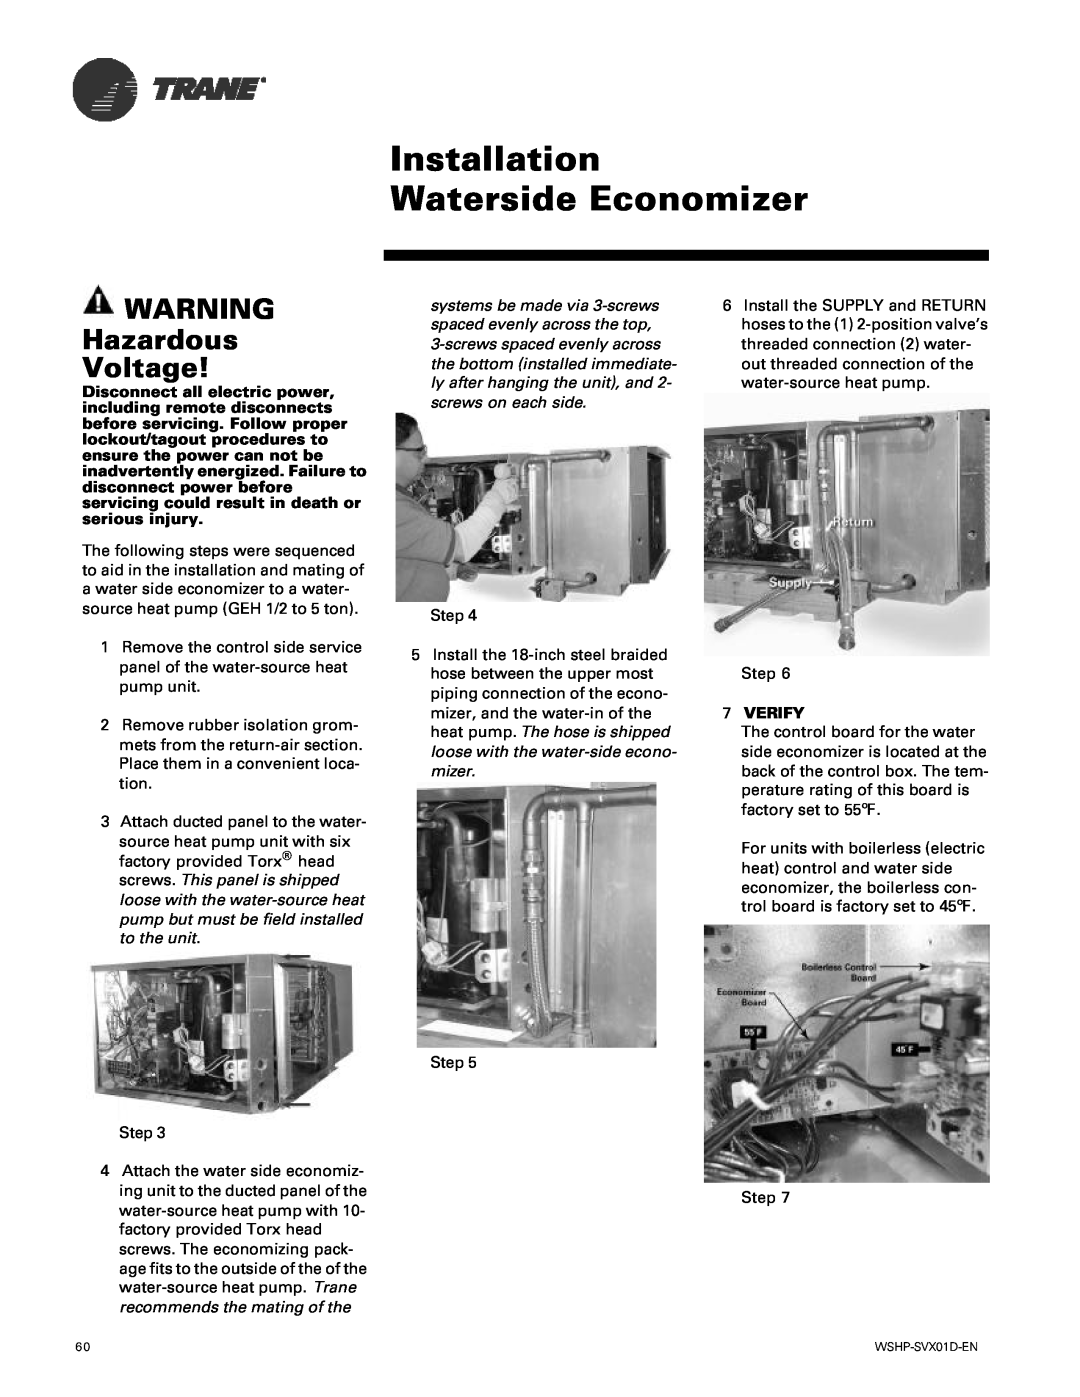 Trane GEH, GEV manual Installation Waterside Economizer, Hazardous Voltage, 7VERIFY 